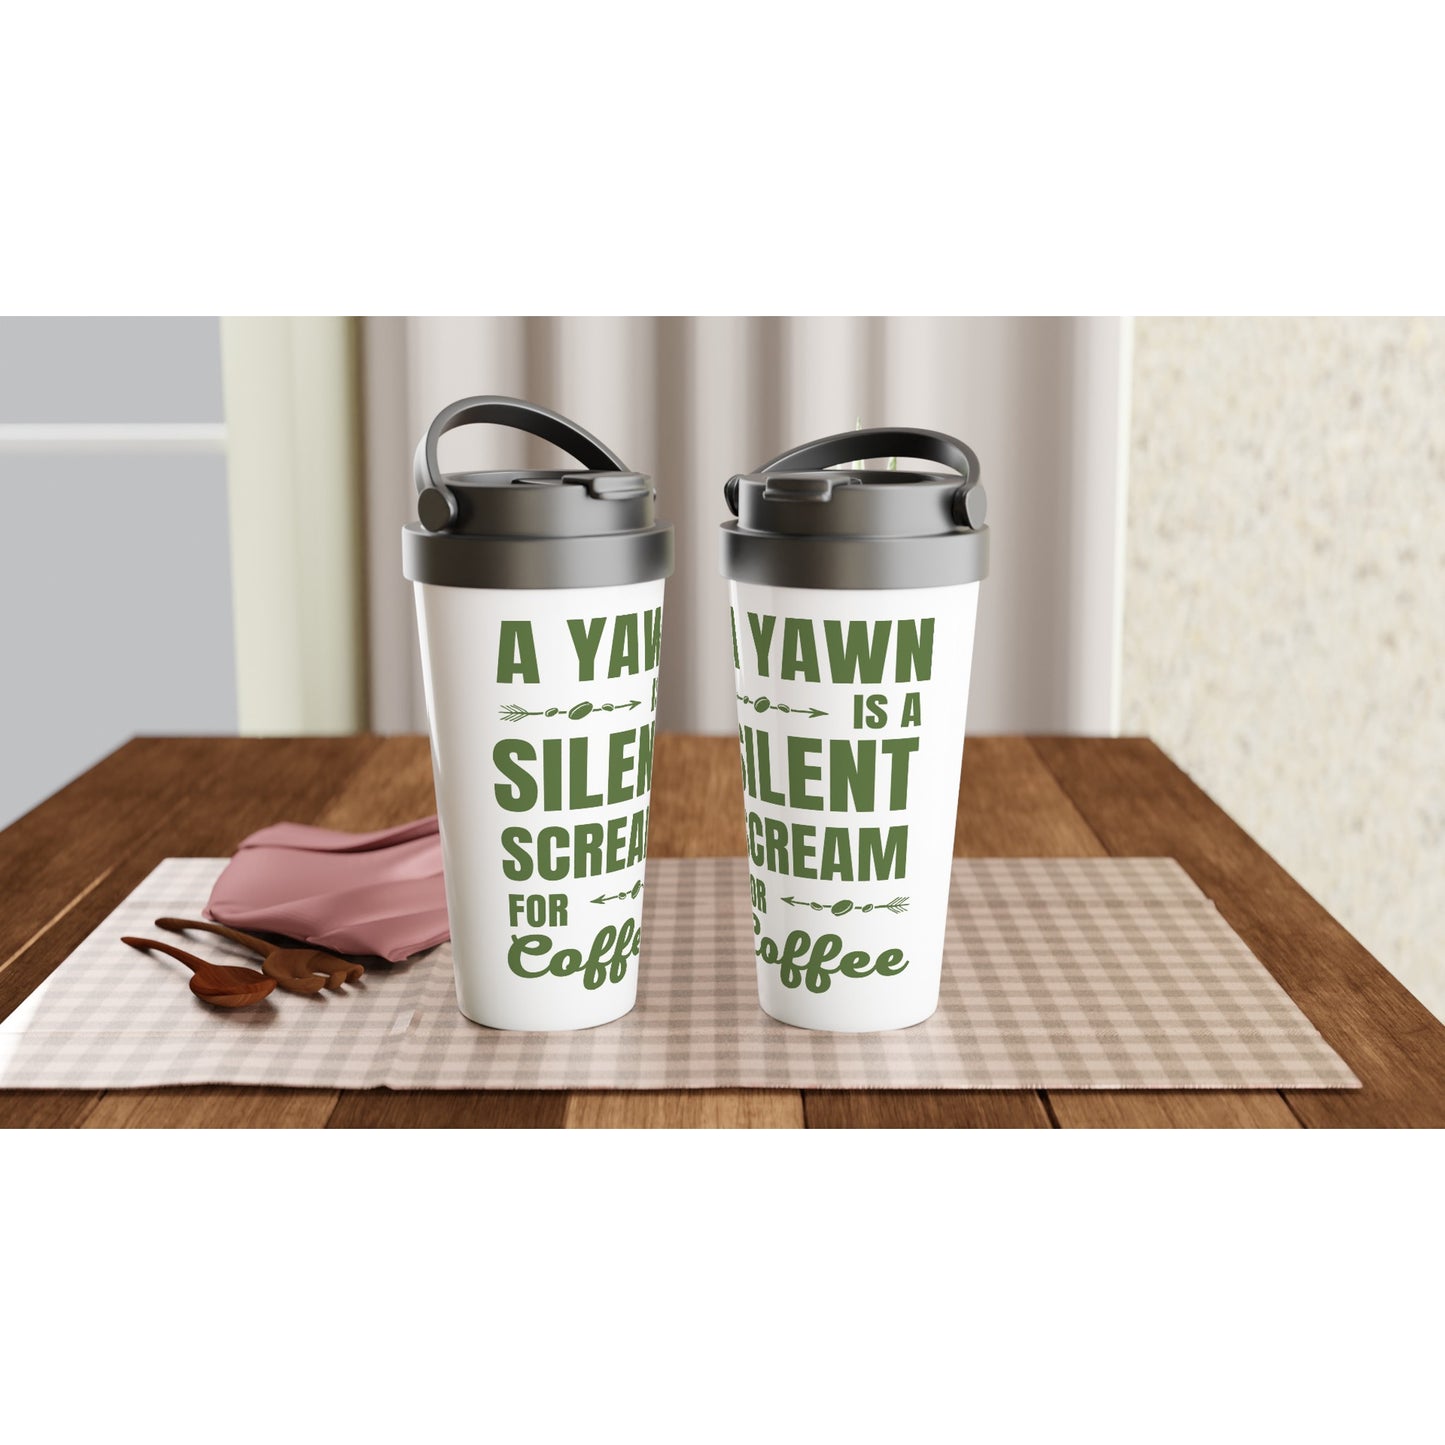 A Yawn Is A Silent Scream For Coffee - White 15oz Stainless Steel Travel Mug Travel Mug Coffee